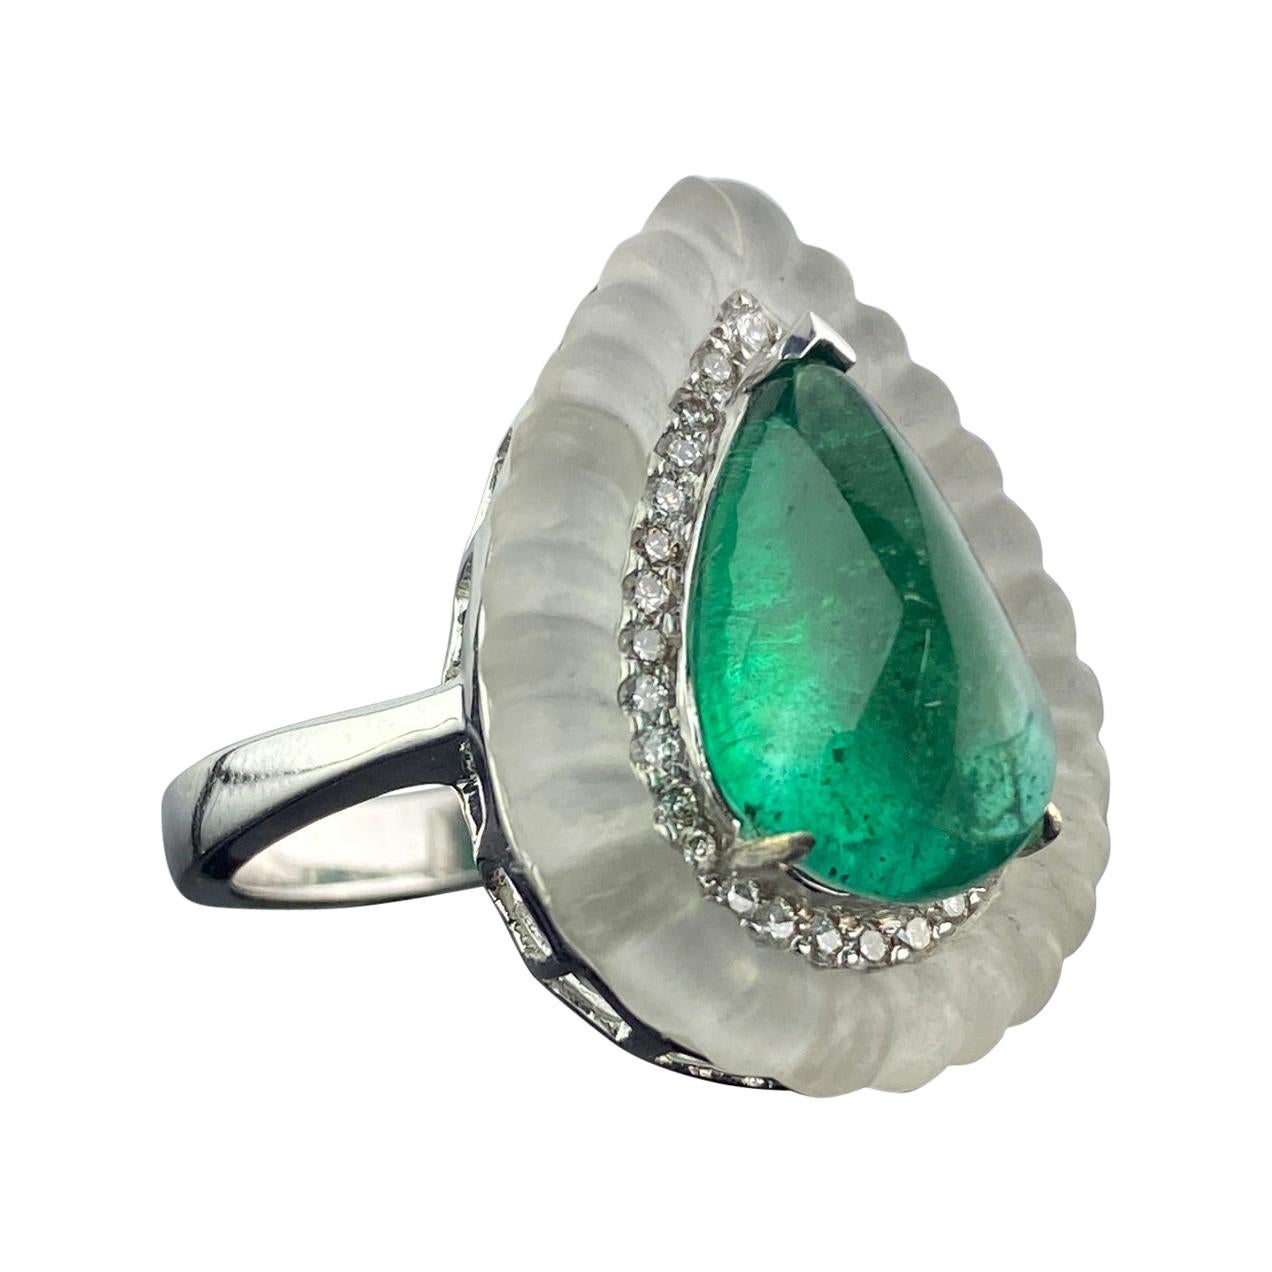 5.15 Carat Pear Shape Cabochon Emerald Art Deco Style Ring